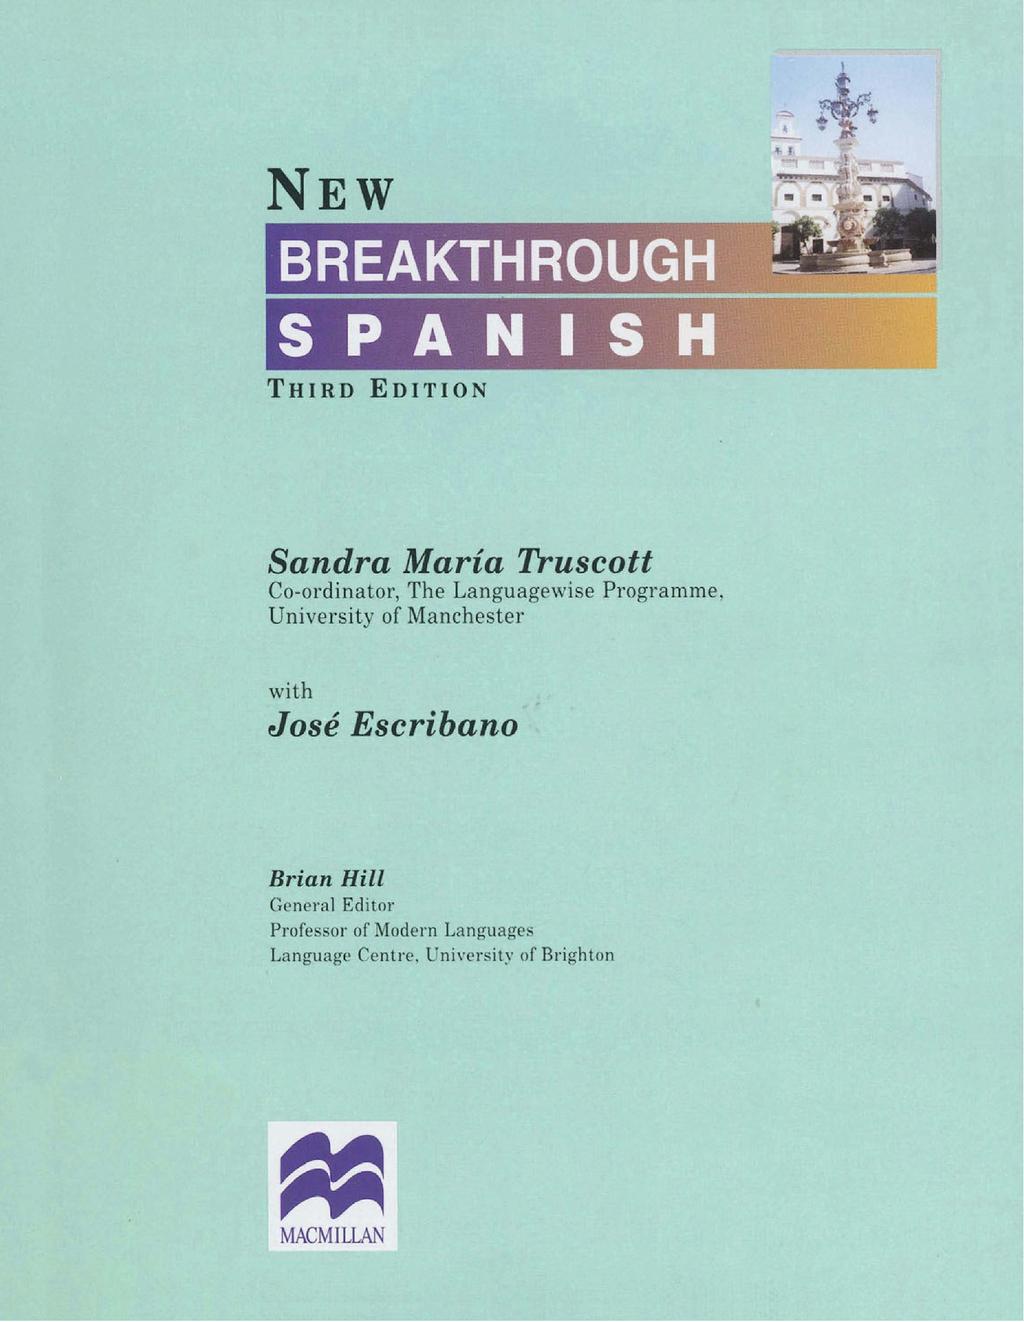 THIRD EDITION Sandra Maria Truscott Co-ordinator, The Languagewise Programme, University of Manchester with Jose